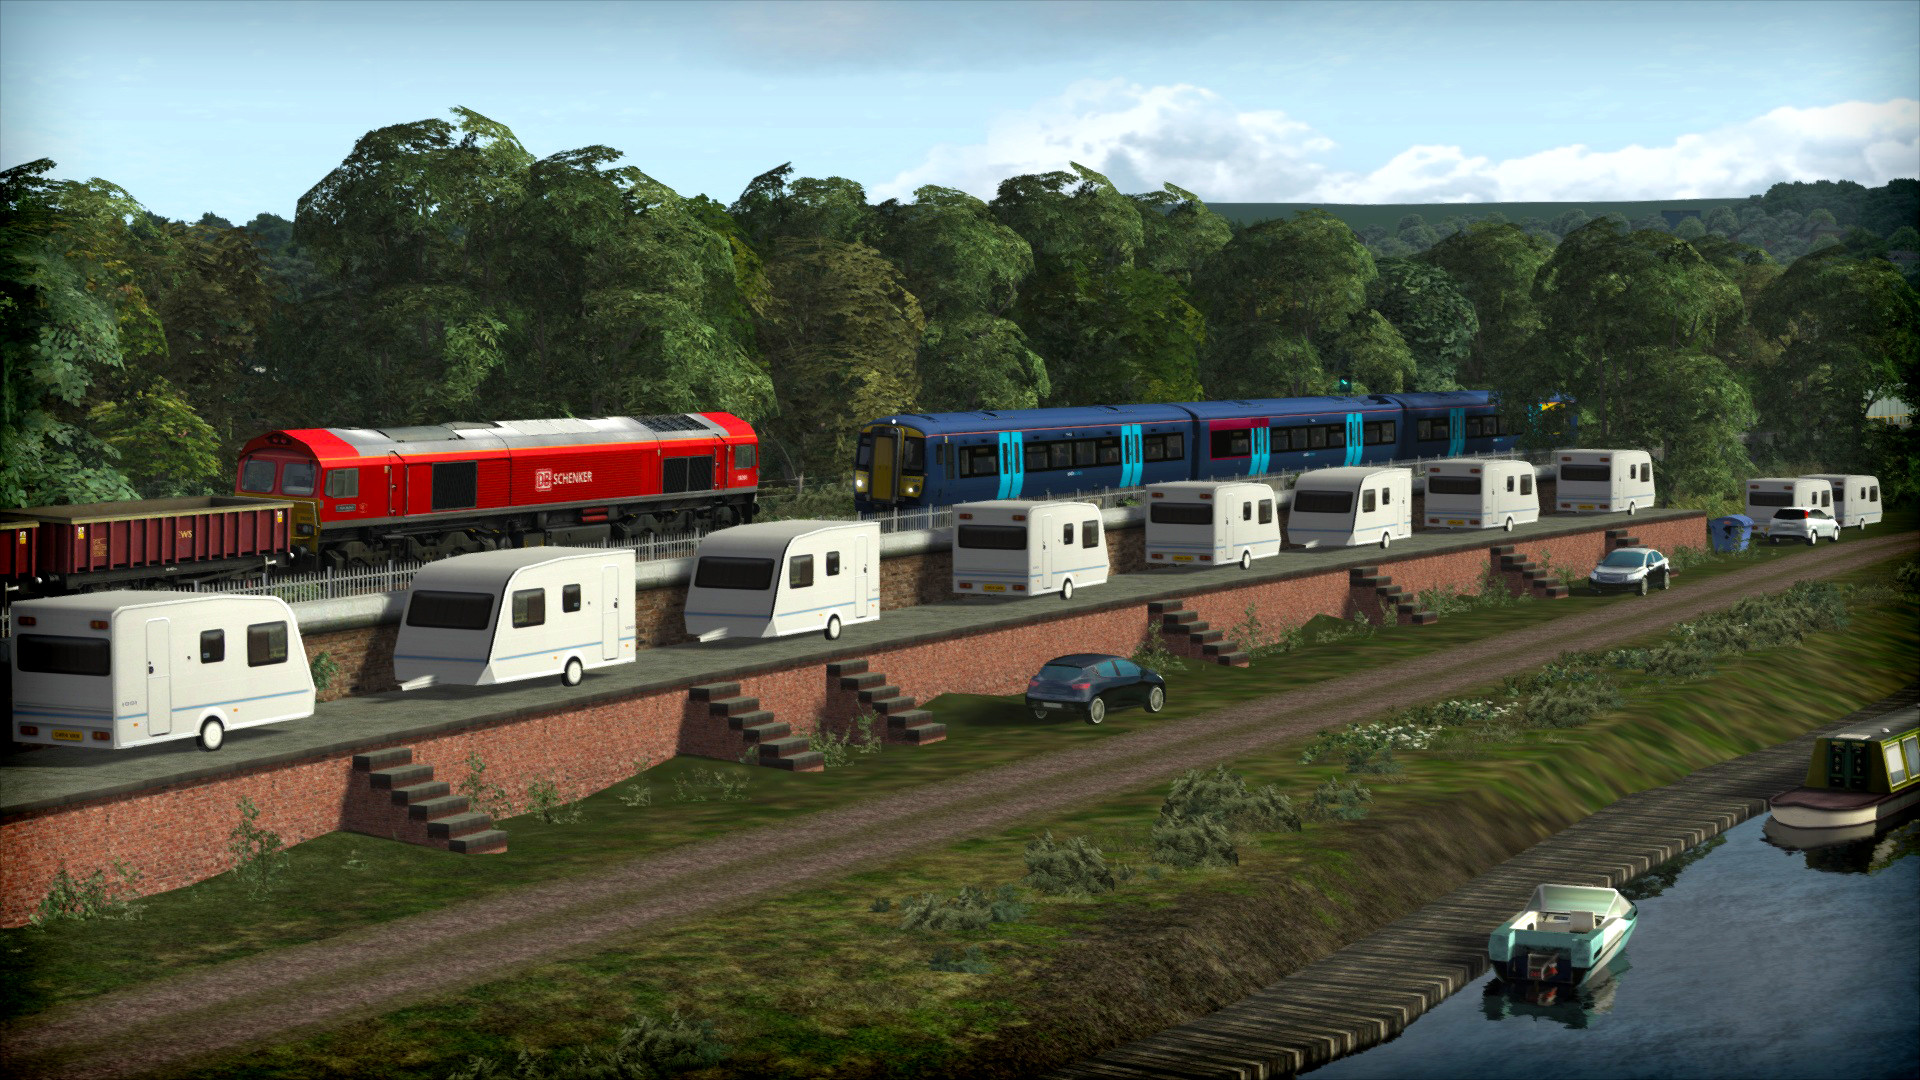 great british railway journeys series 2 episode 1